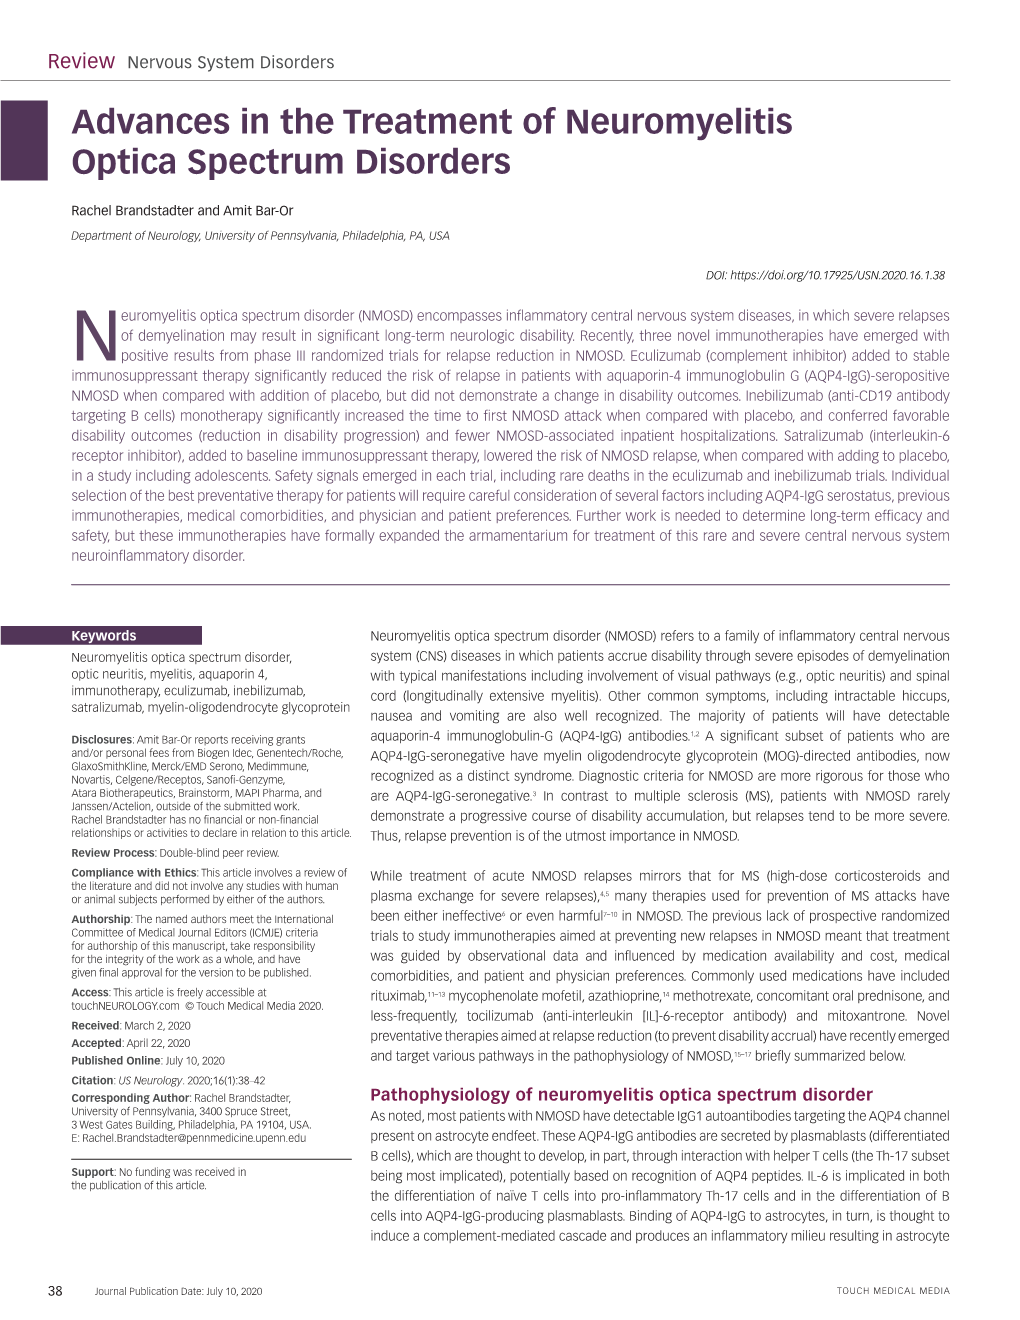 Advances in the Treatment of Neuromyelitis Optica Spectrum Disorders